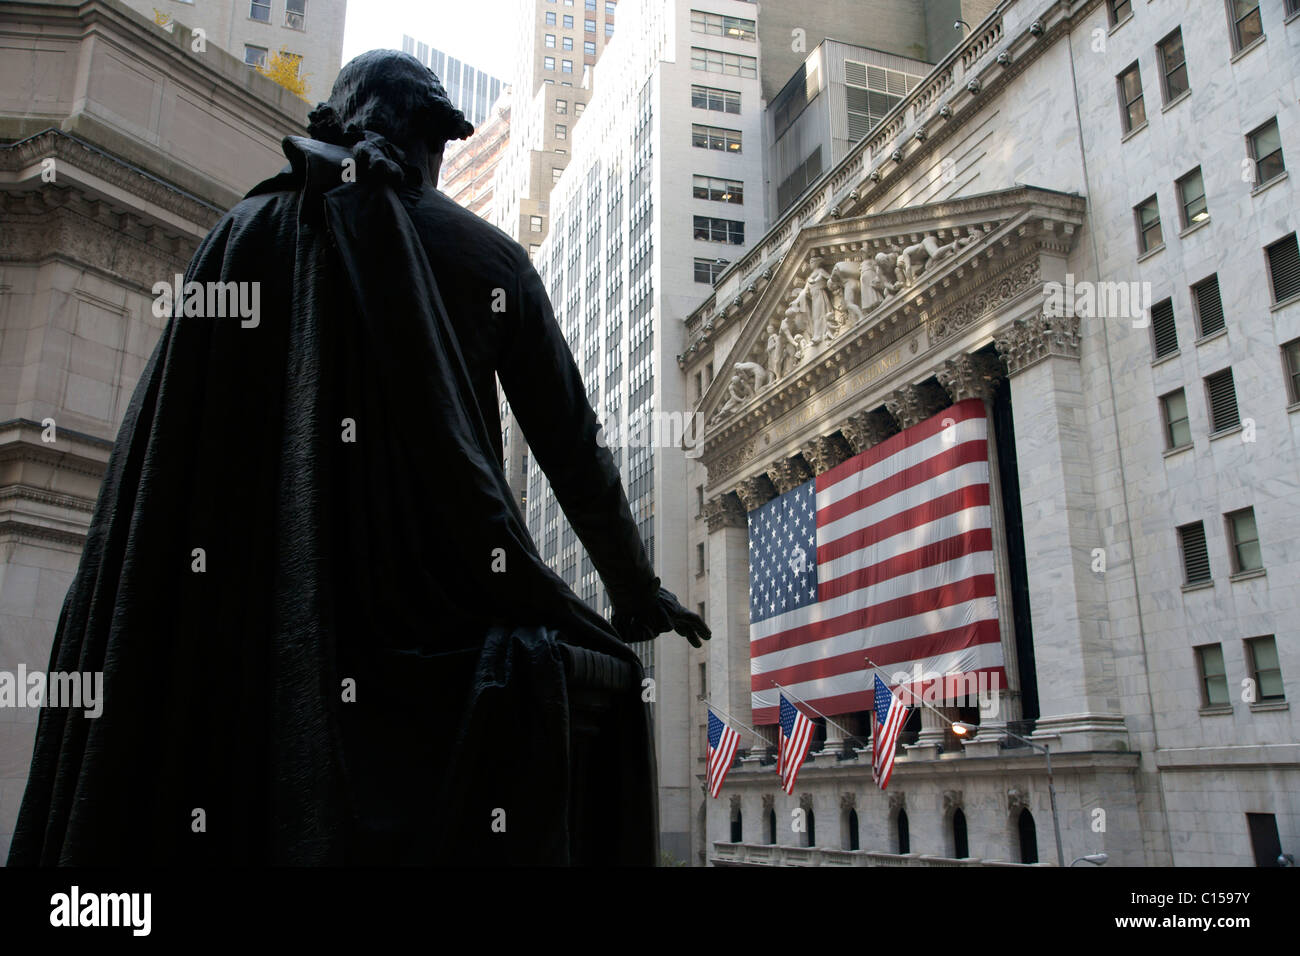 George Washington Statue outside New York Stock Exchange on Wall Street Stock Photo